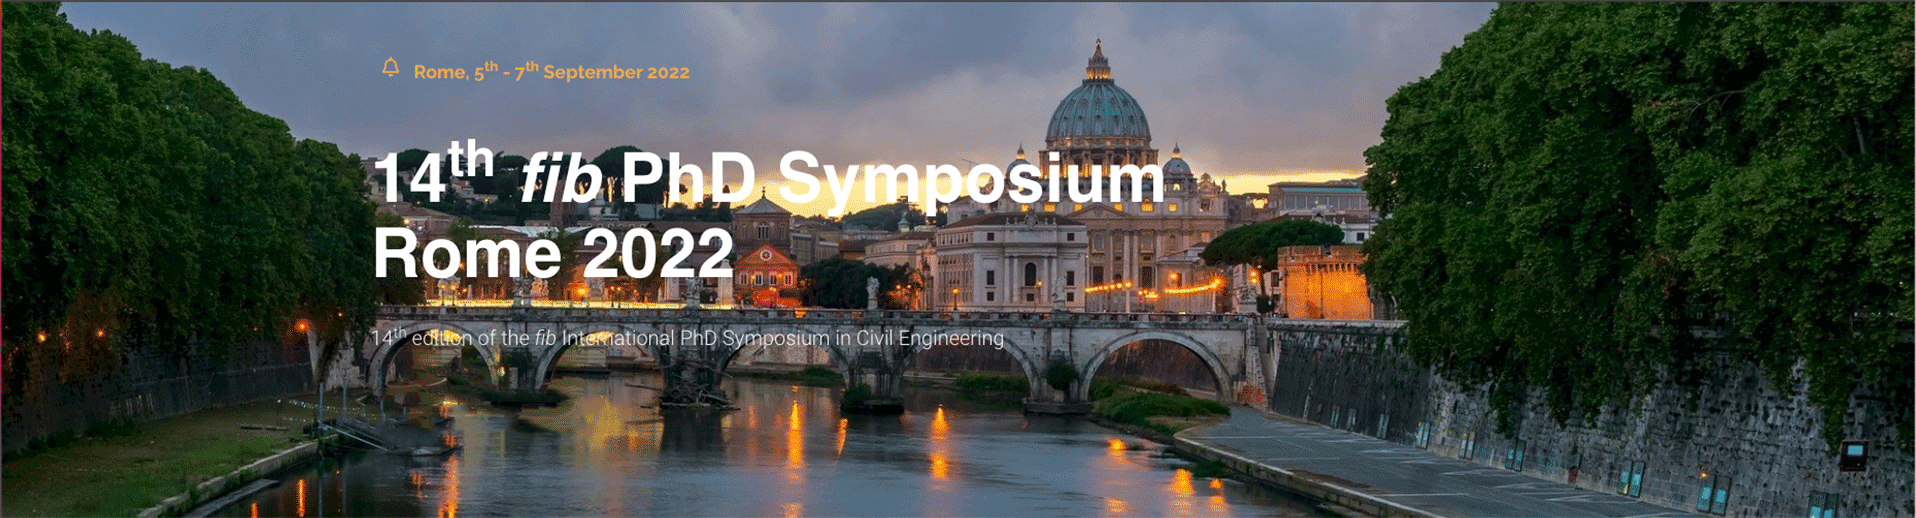 fib PhD Symposium 2022 - Roma